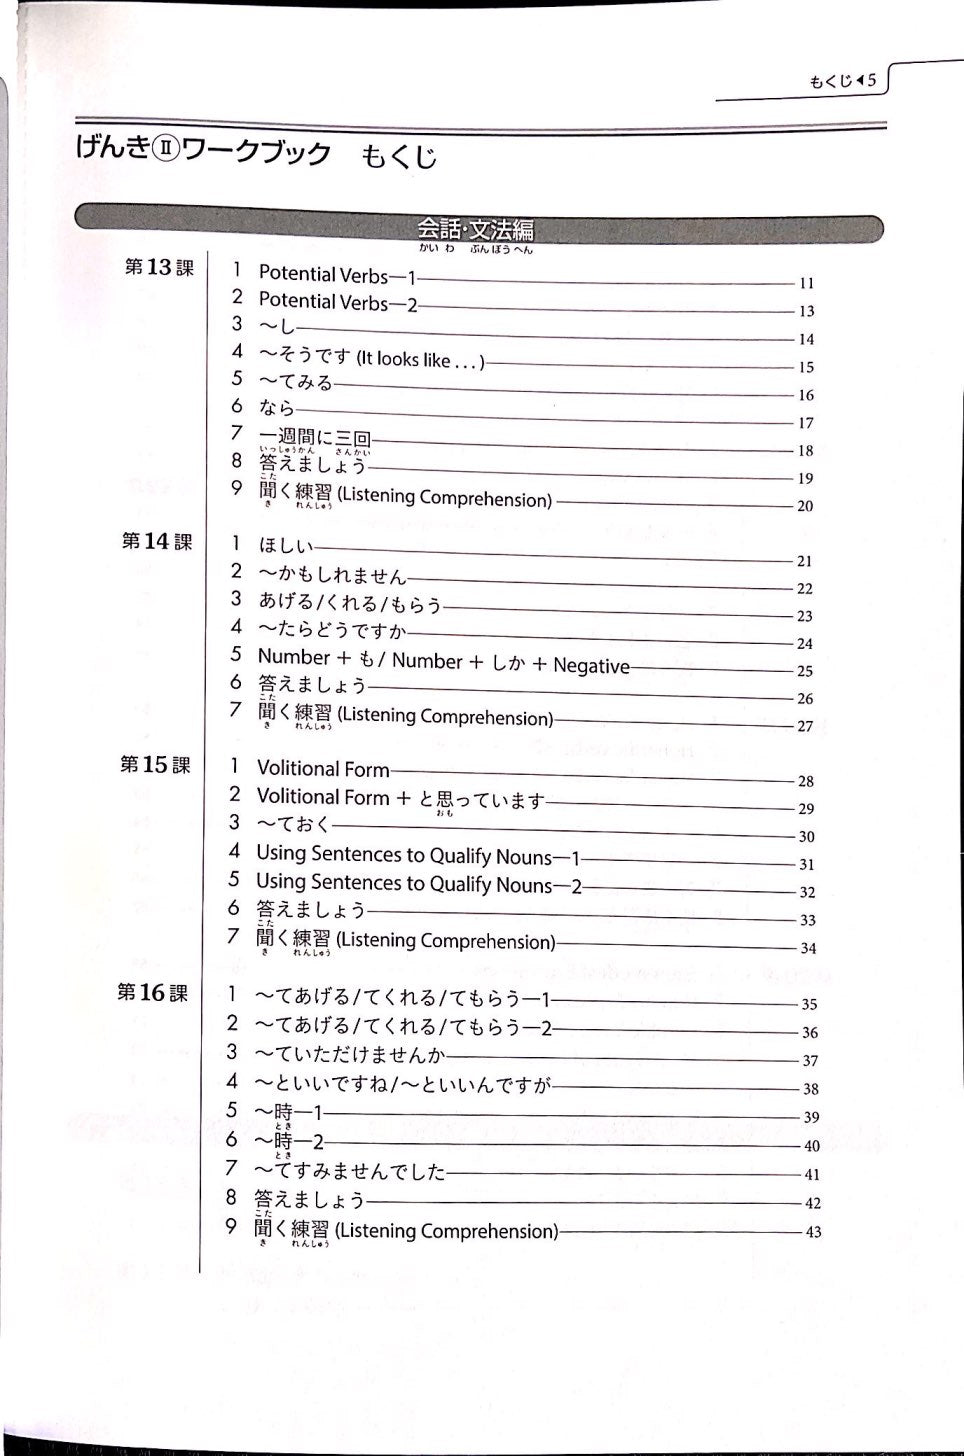 Genki II Workbook (3rd Edition)